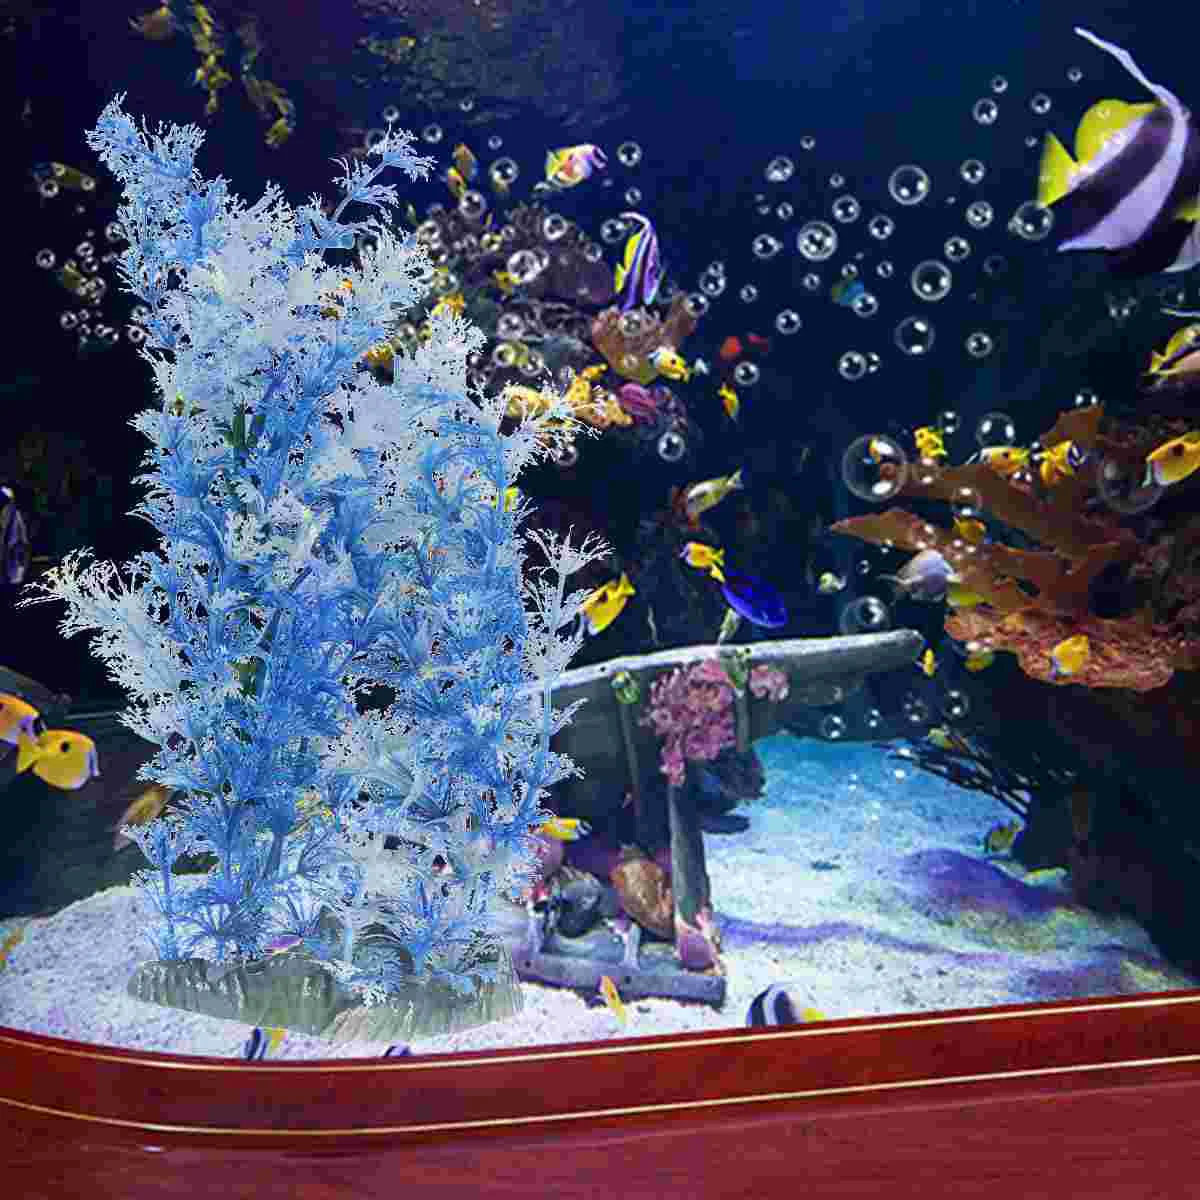 

Aquarium Tank Artificial Decorations Simulation Decor Tall Aquatic Water Decoration Tanks Accessories Large Blue Ornament